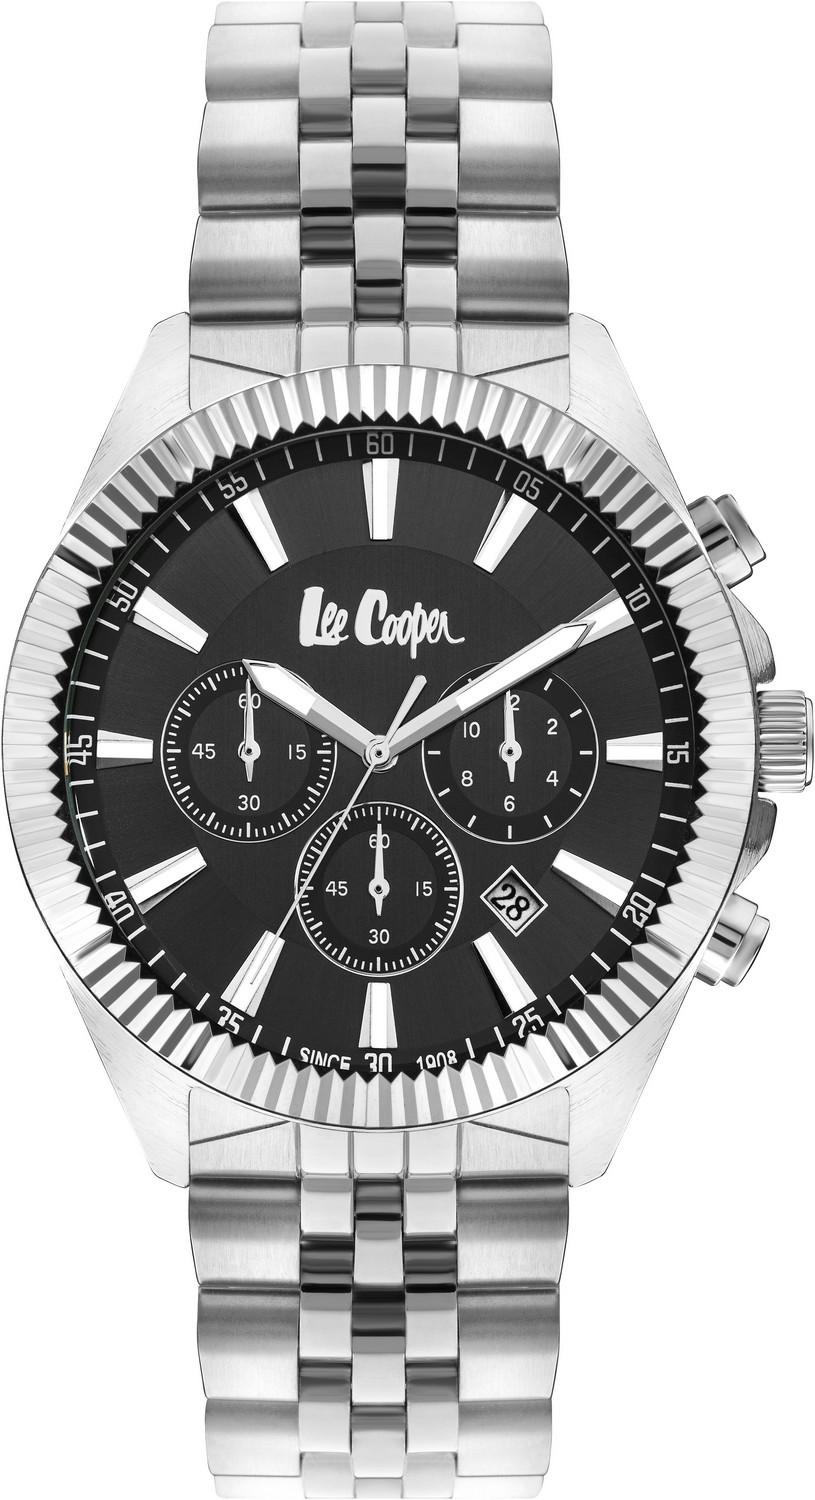 LEE COOPER  Мужские часы, кварцевый механизм, суперметалл, 45 мм